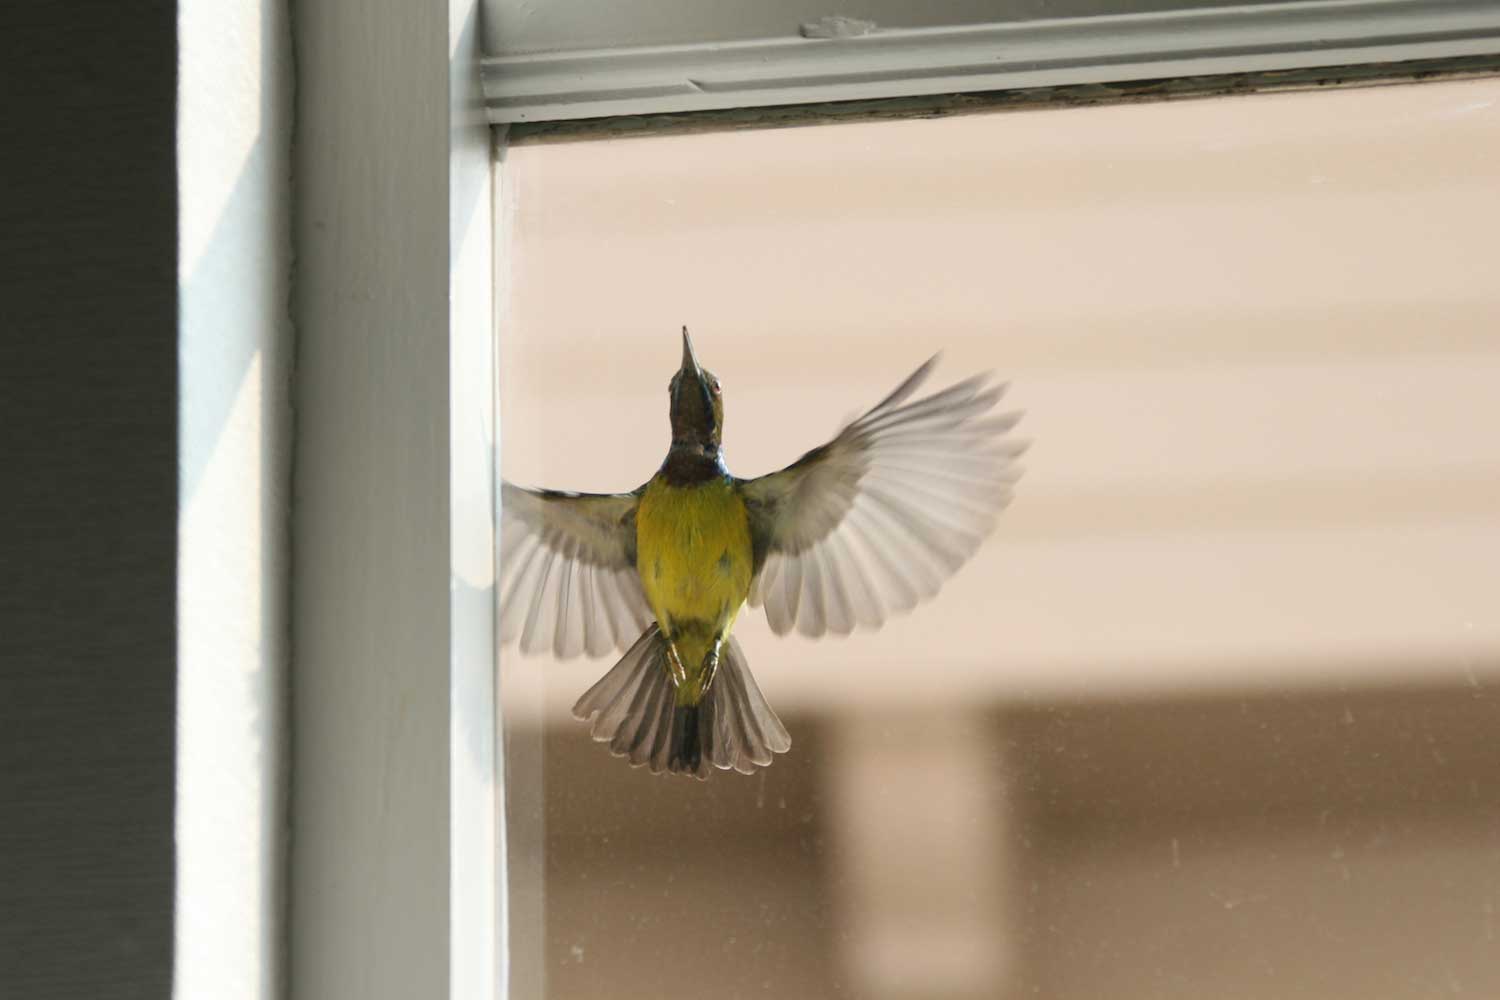 Bird Keeps Flying Into Living Room Window